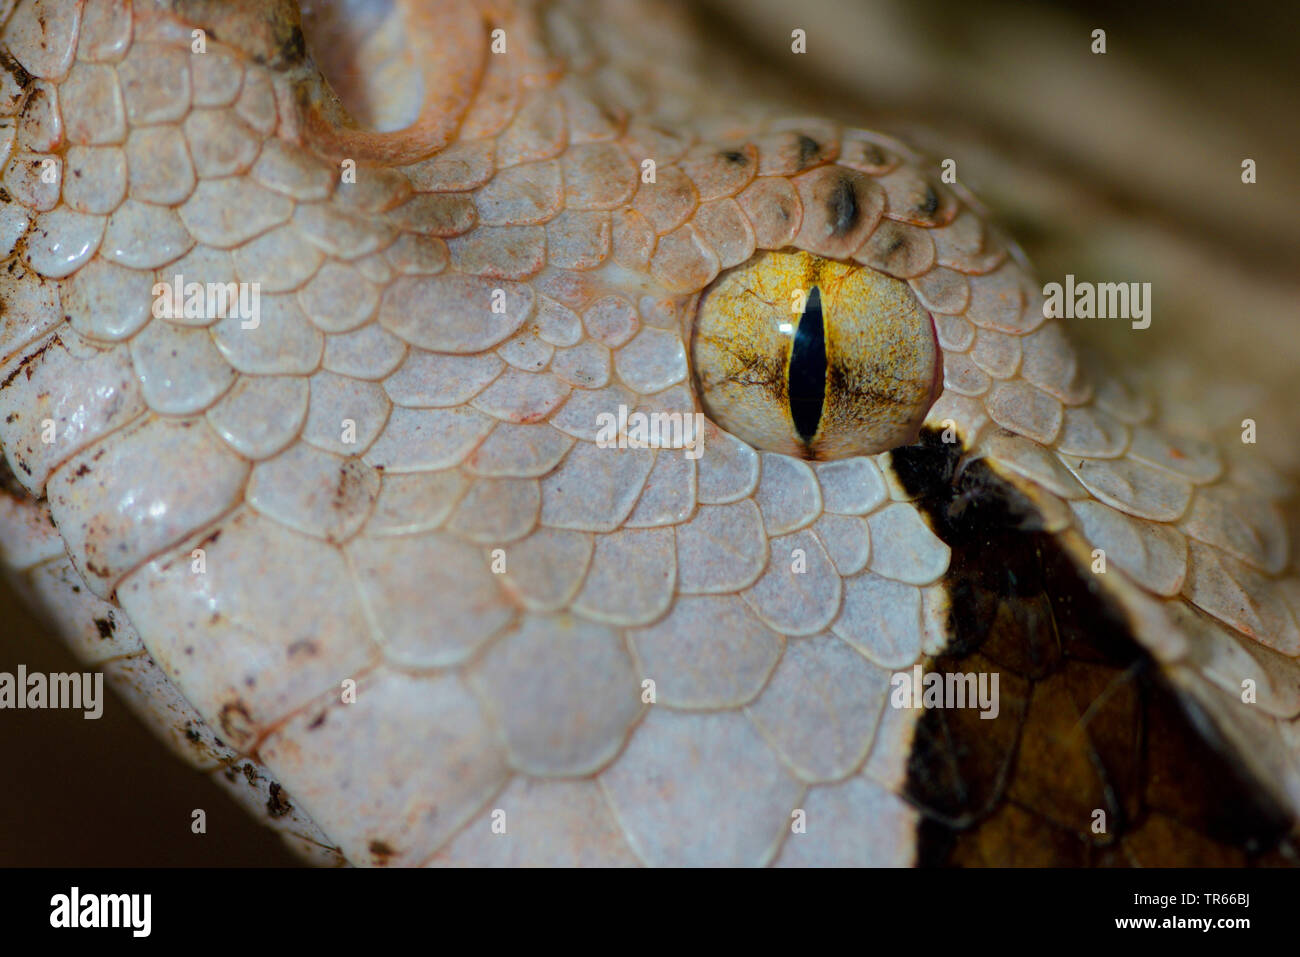 Western Gaboon viper (Bitis gabonica rhinoceros, Bitis rhinoceros), snake eye, detail, Africa Stock Photo